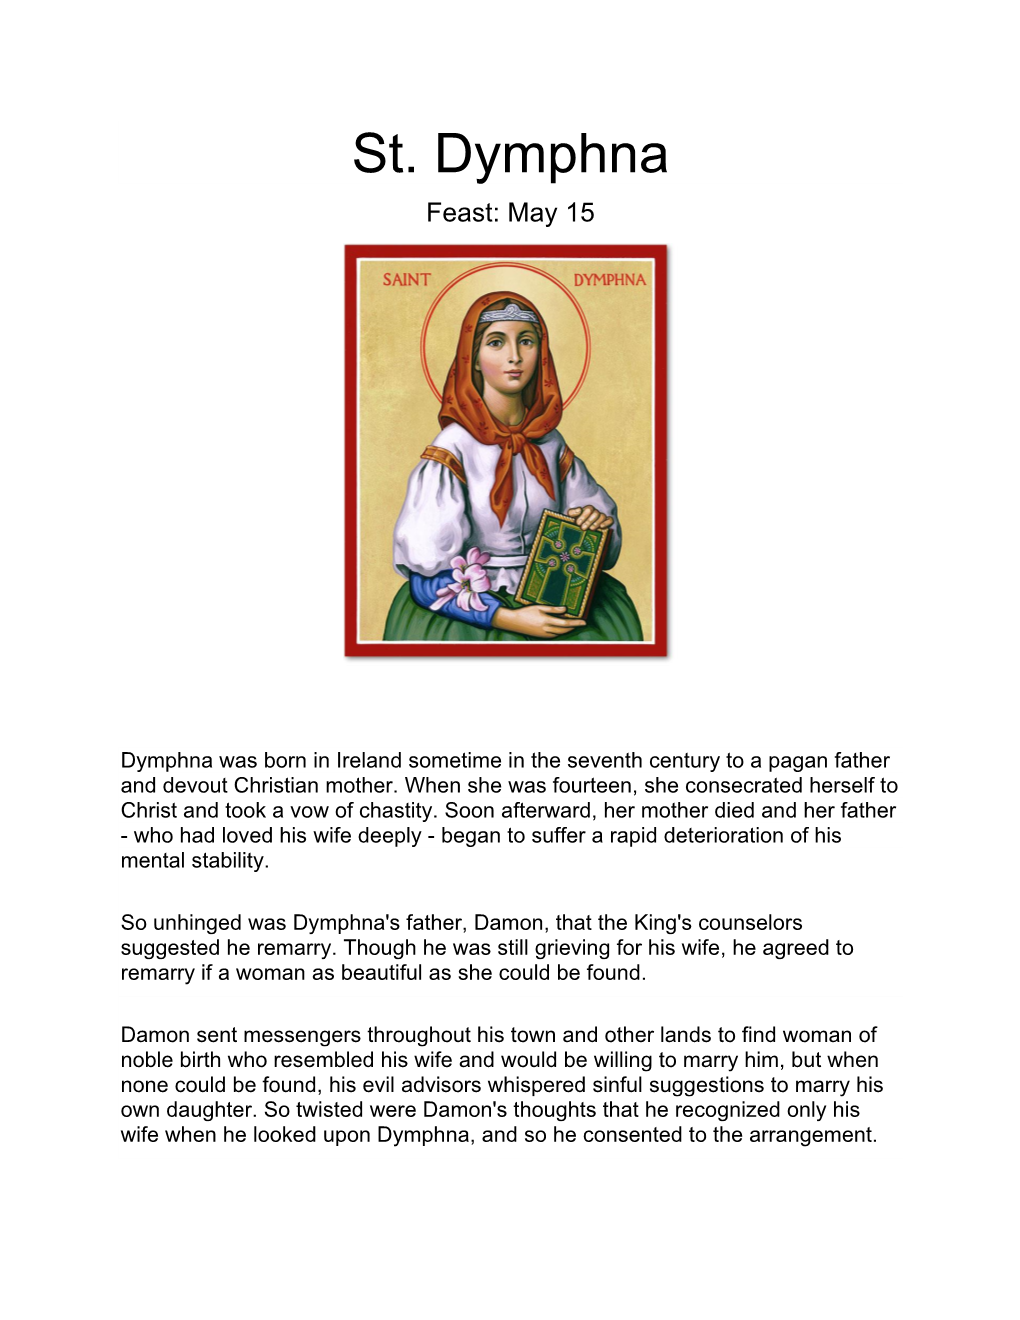 St. Dymphna Feast: May 15